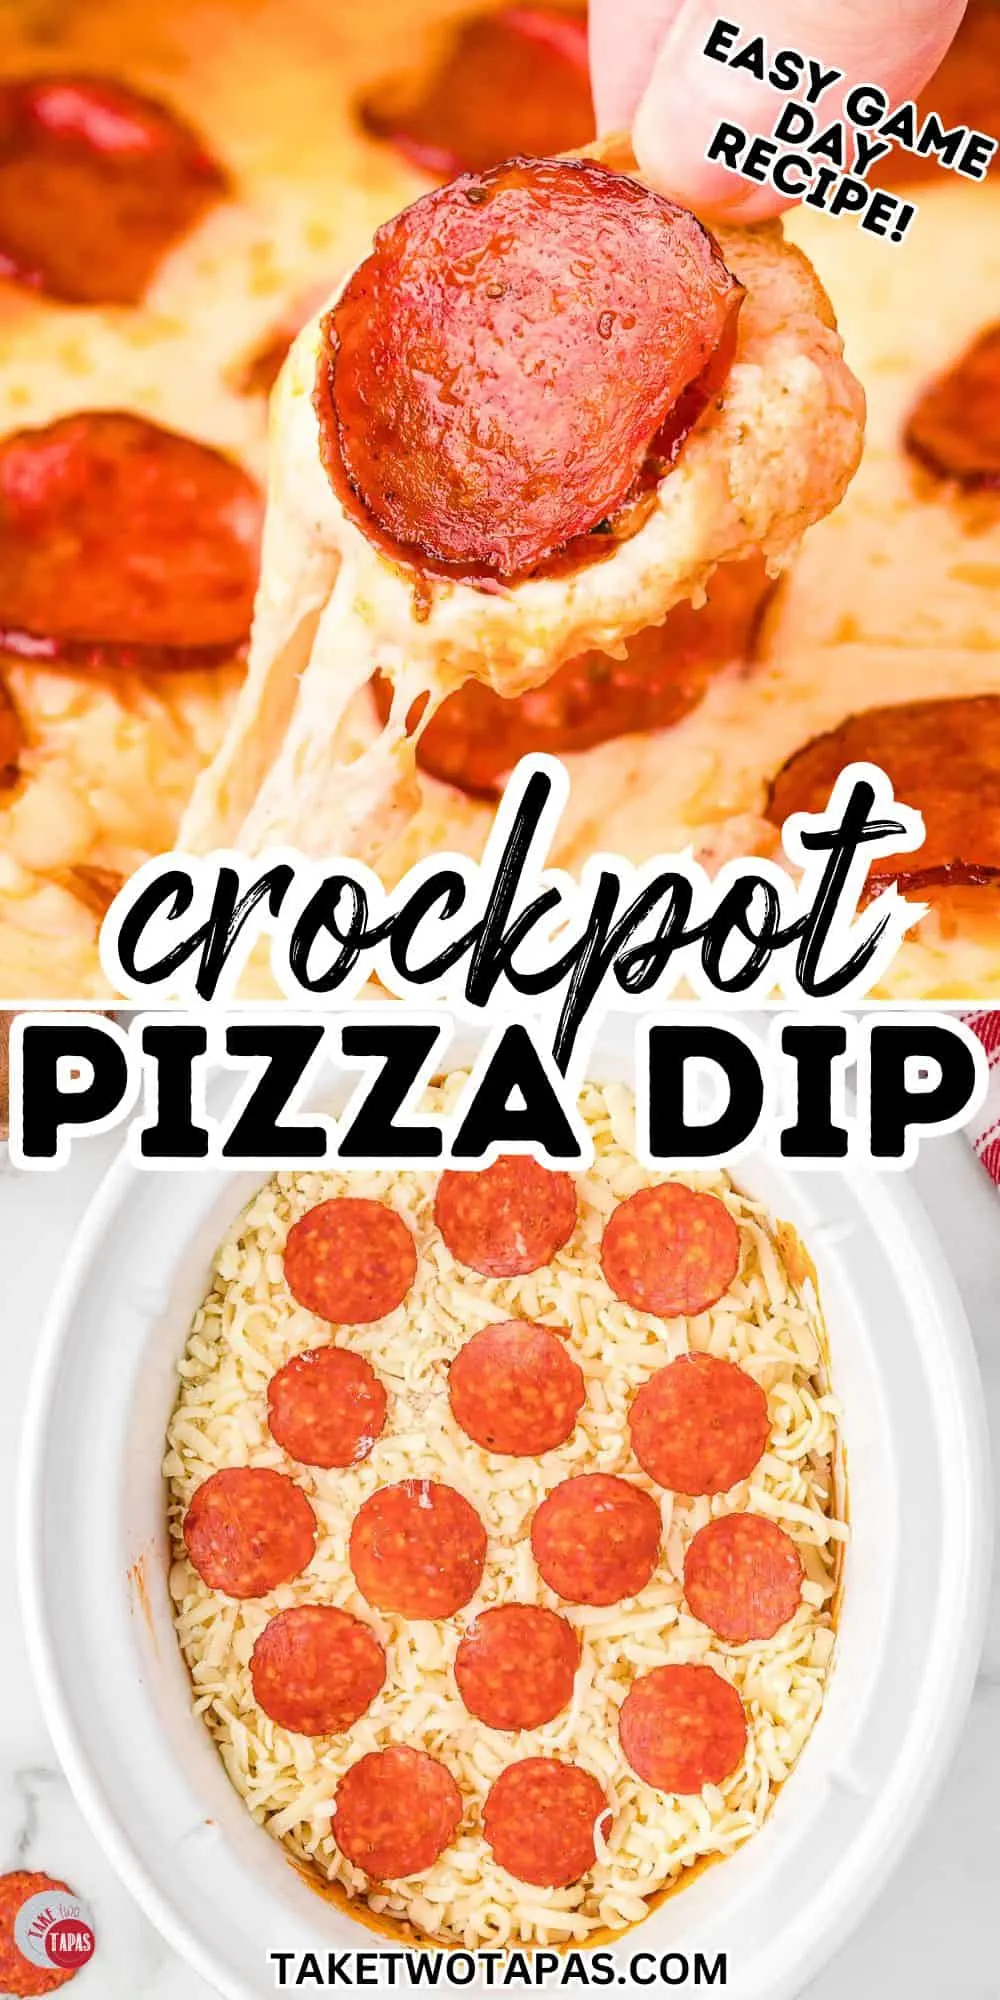 crockpot pizza dip collage